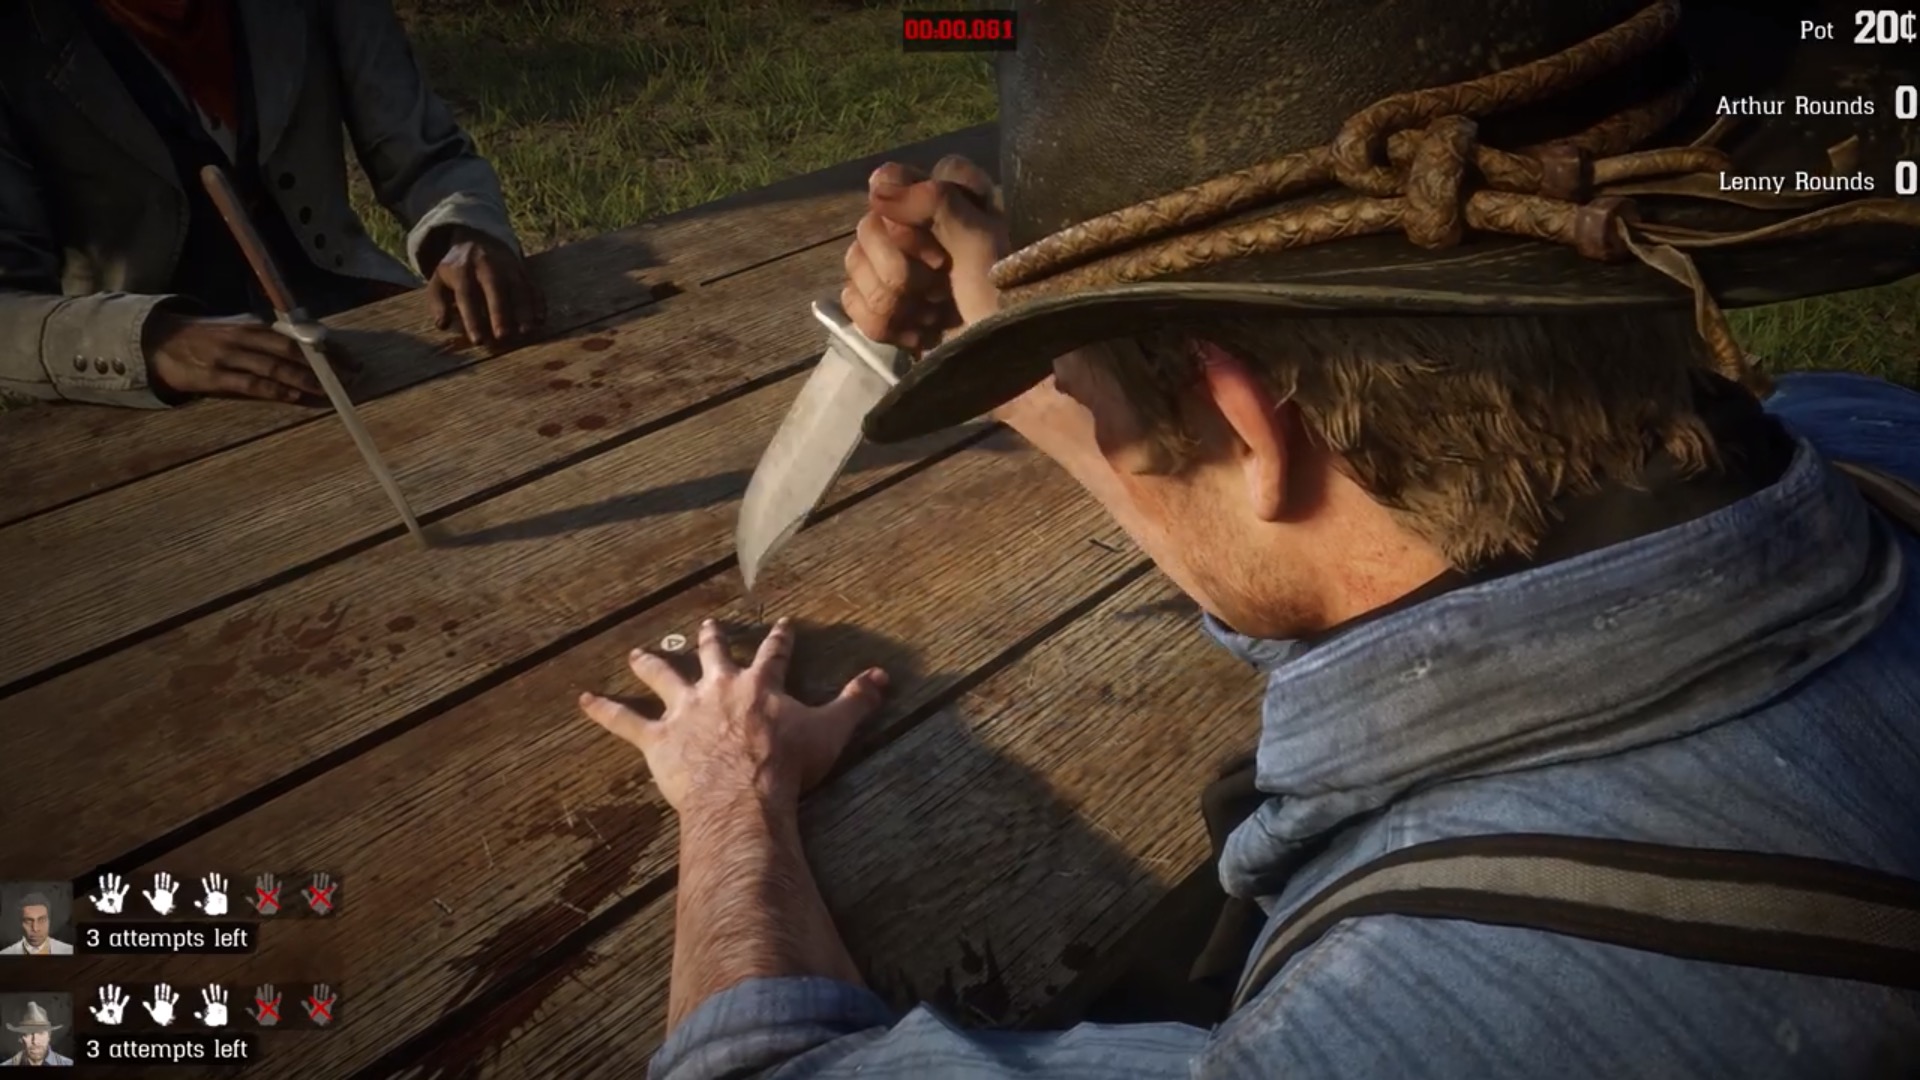 Red Dead Redemption 2 Gameplay Trailer Shocks With Wild West Violence1920 x 1080